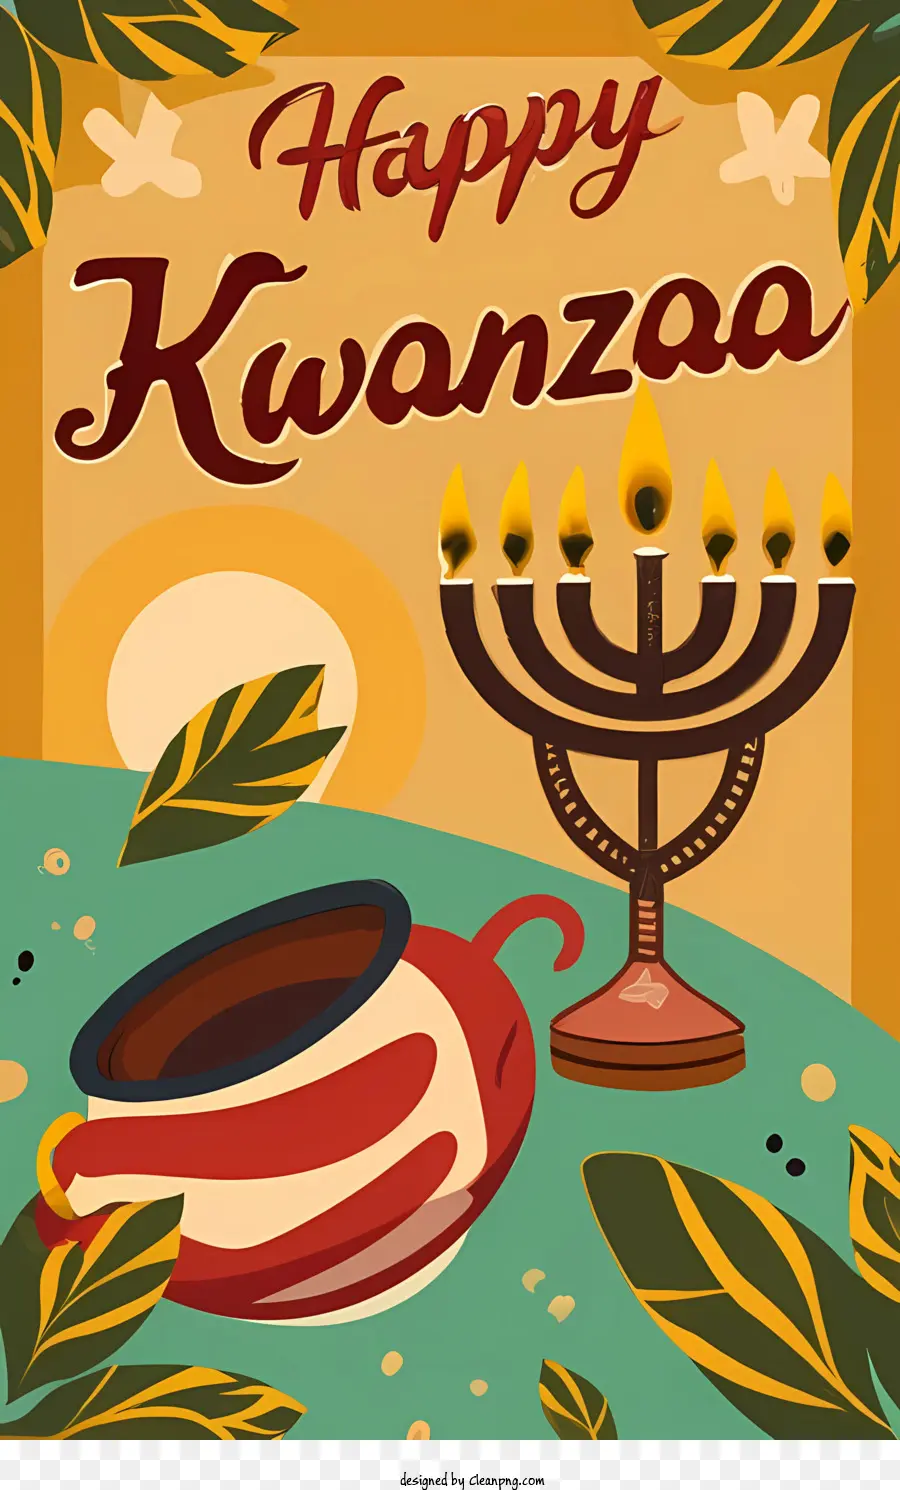 Happy Kwanzaa Kwanzaa Kwanzaa Thẻ Người Do Thái đa dạng - 